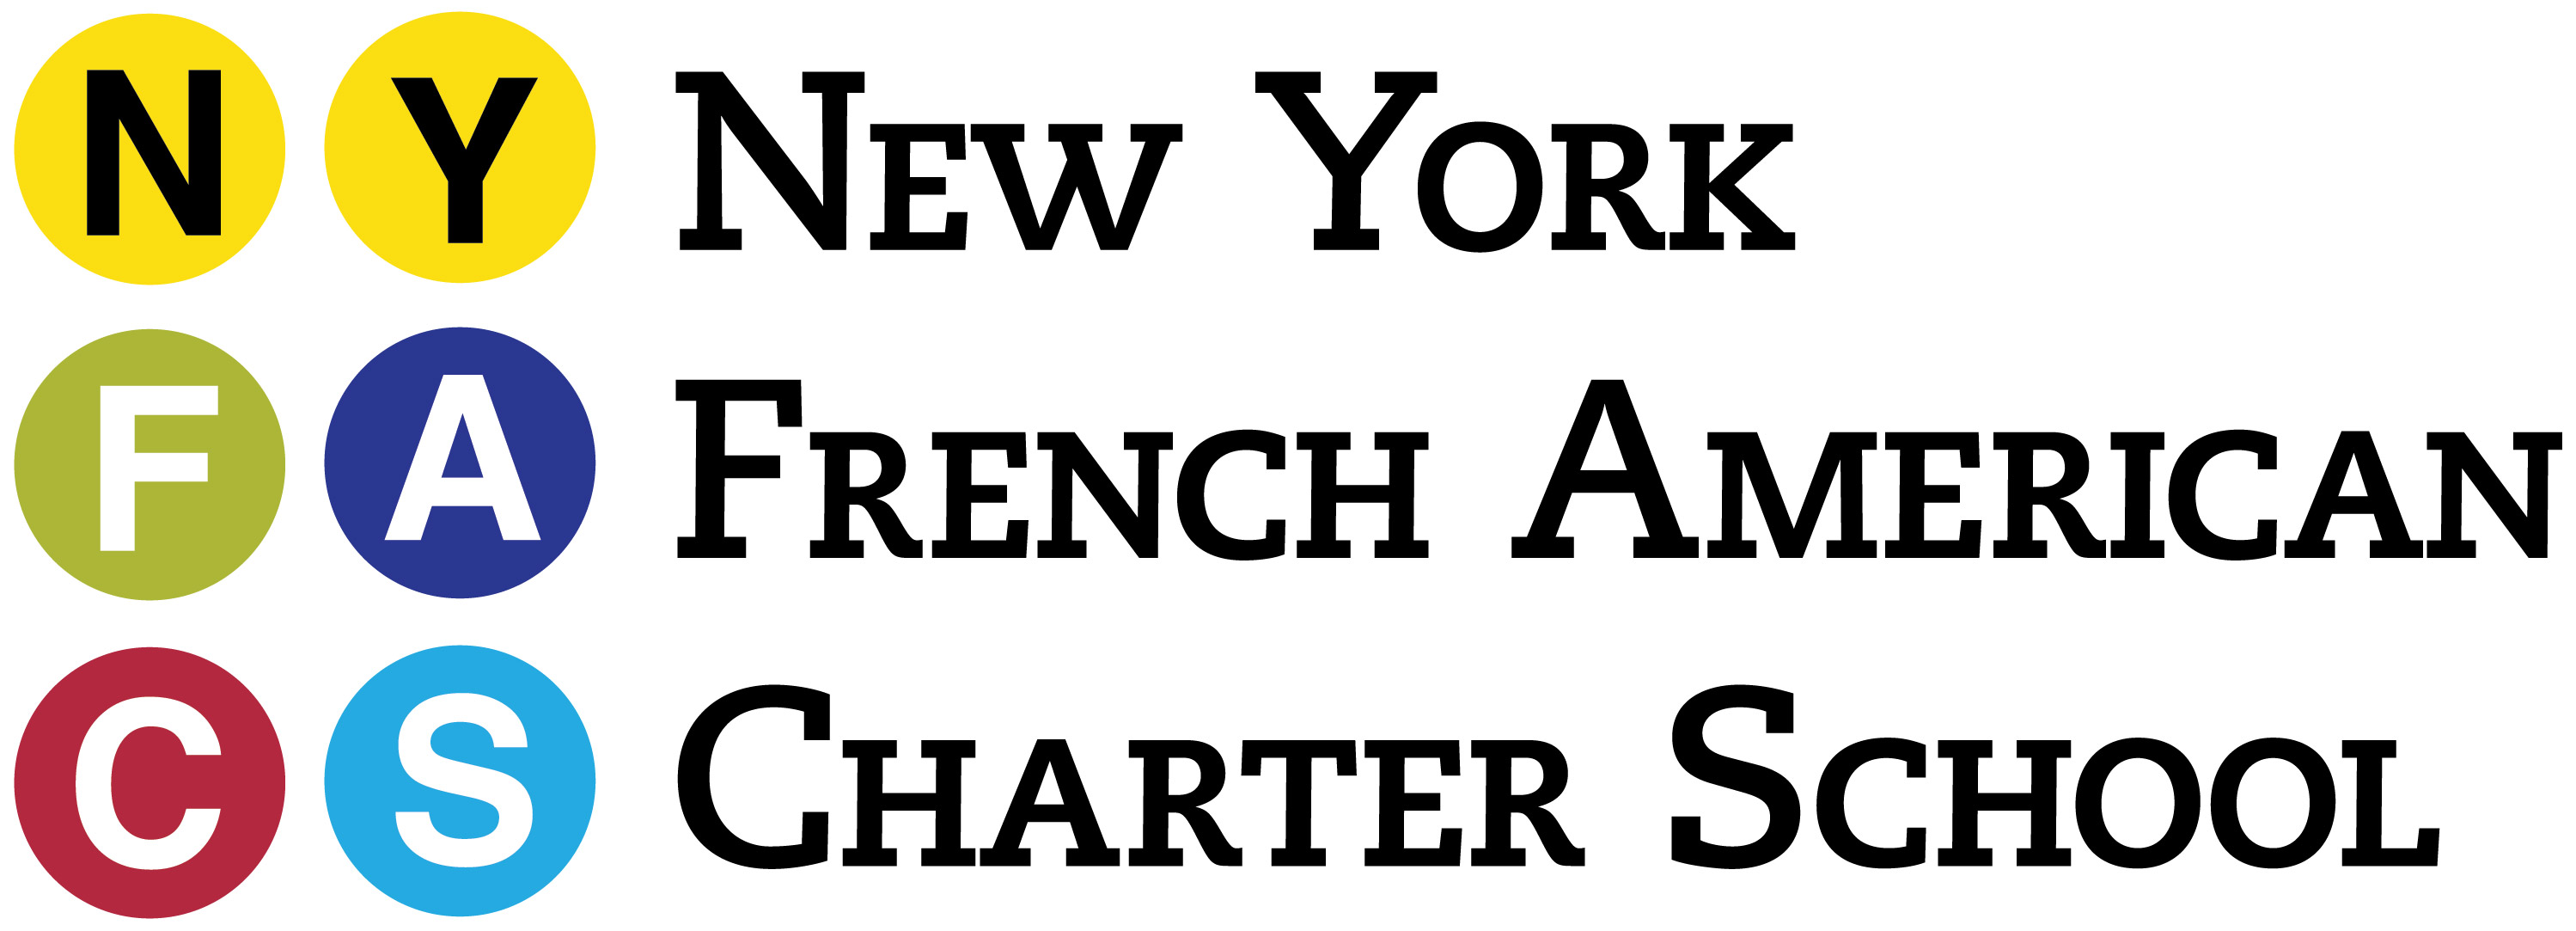 New York French American Charter School